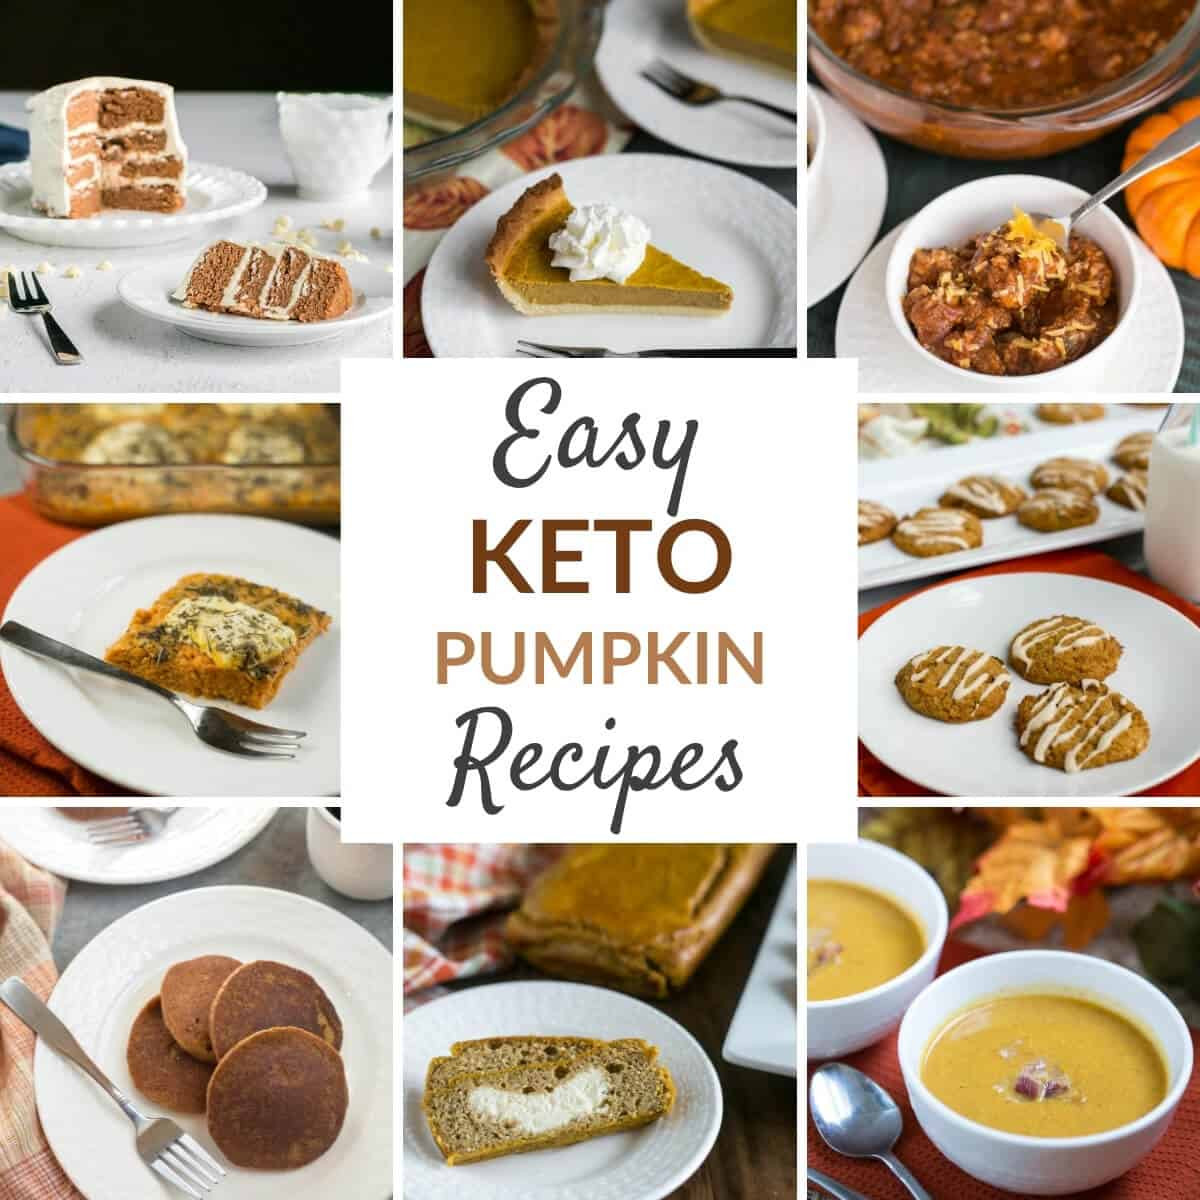 Pumpkin Keto Easy
 The Best Easy Keto Pumpkin Recipes